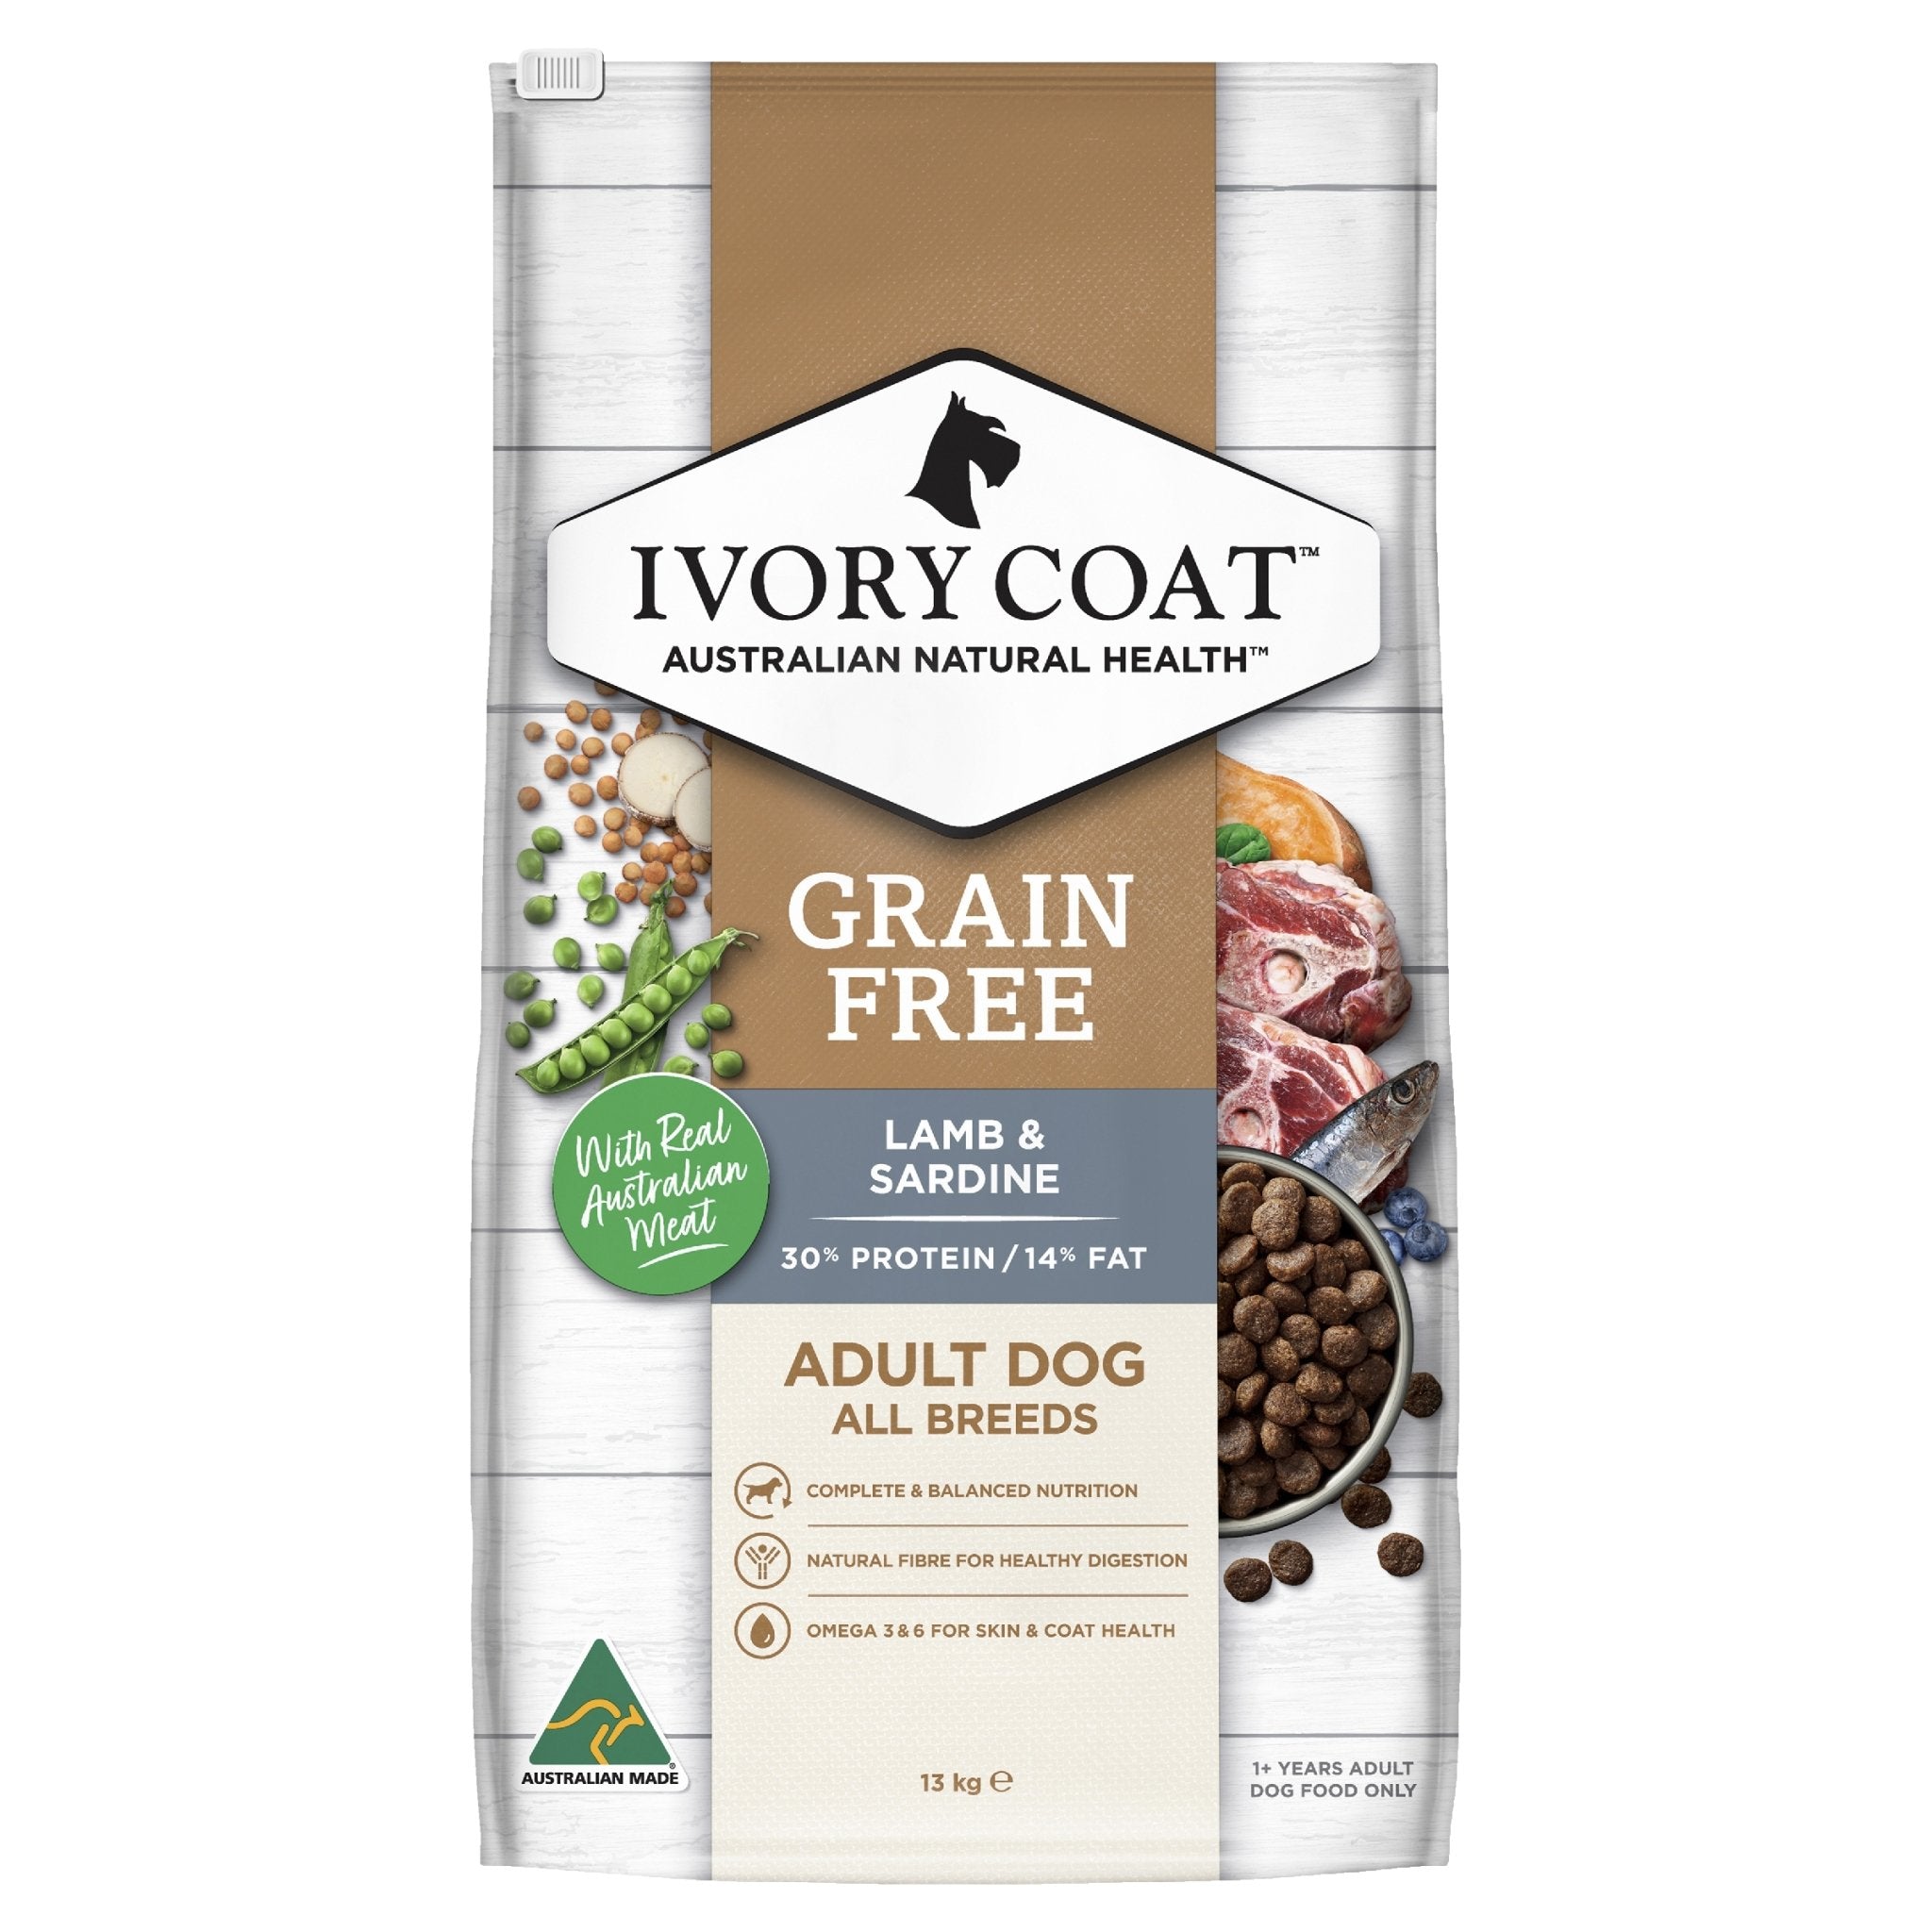 Ivory Coat Lamb & Sardine Grain Free Dry Dog Food